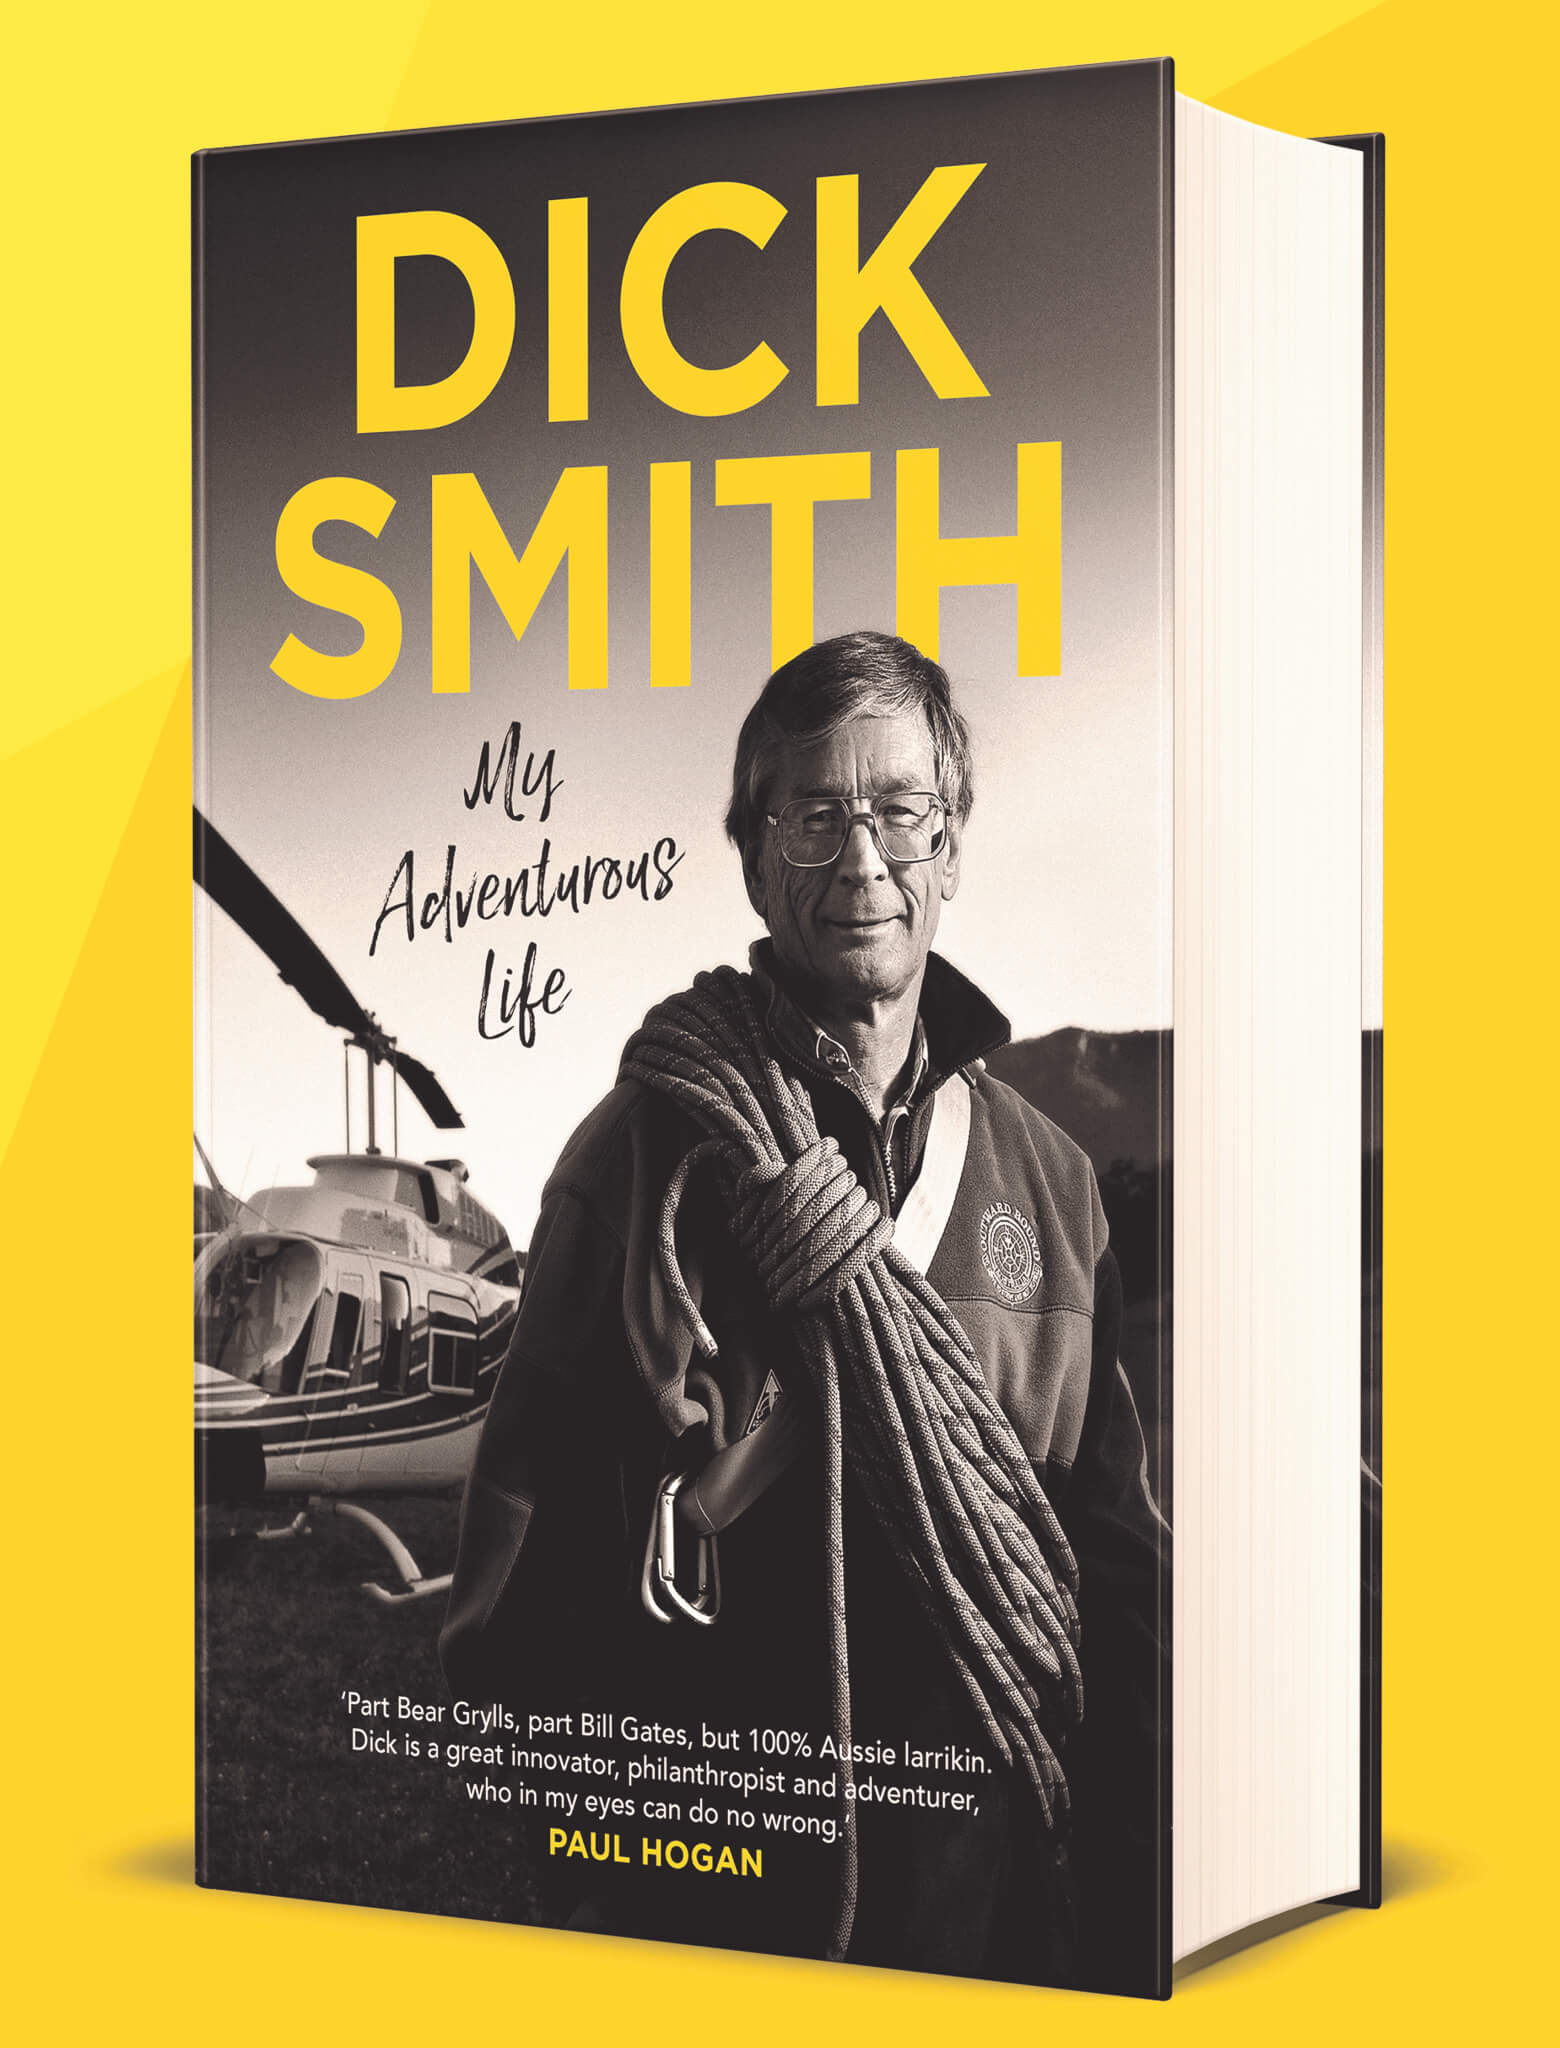 Dick Smith Book Leadership Through Adventure Fund Launch